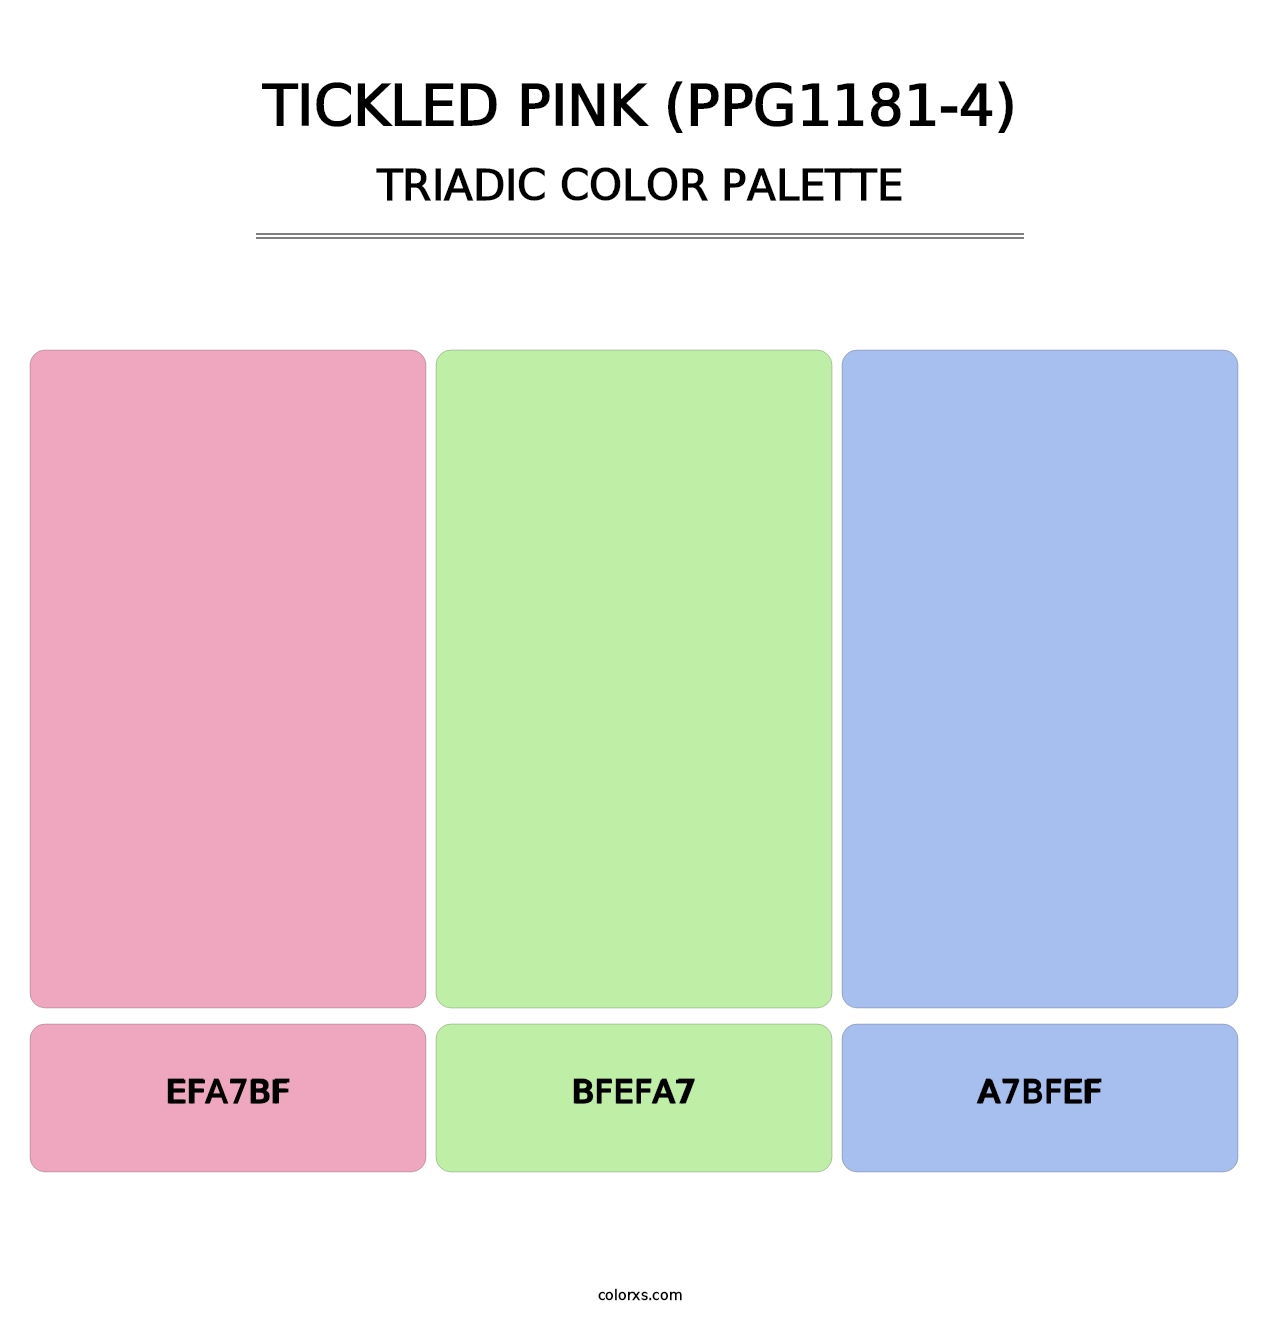 Tickled Pink (PPG1181-4) - Triadic Color Palette